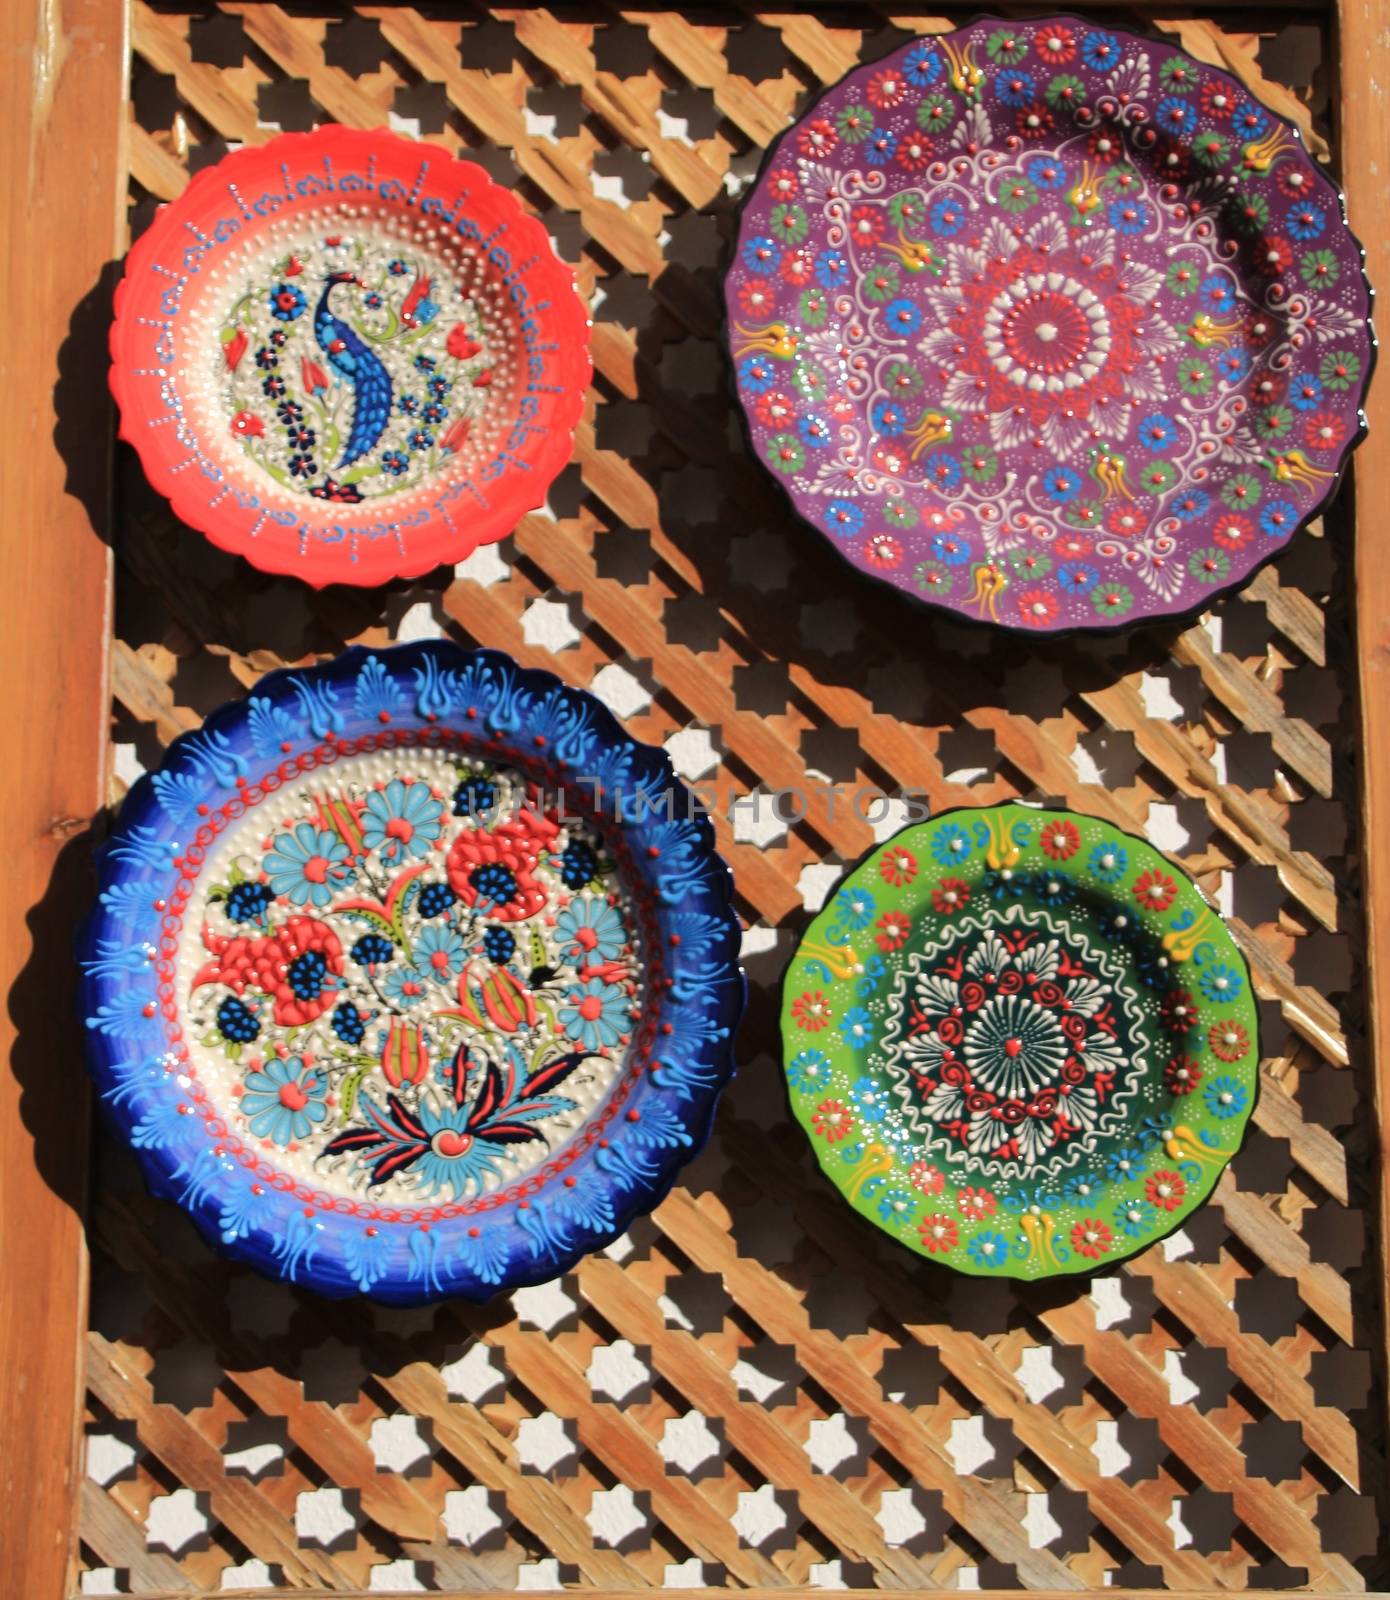 Ceramic souvenirs for sale in Cordoba, Spain